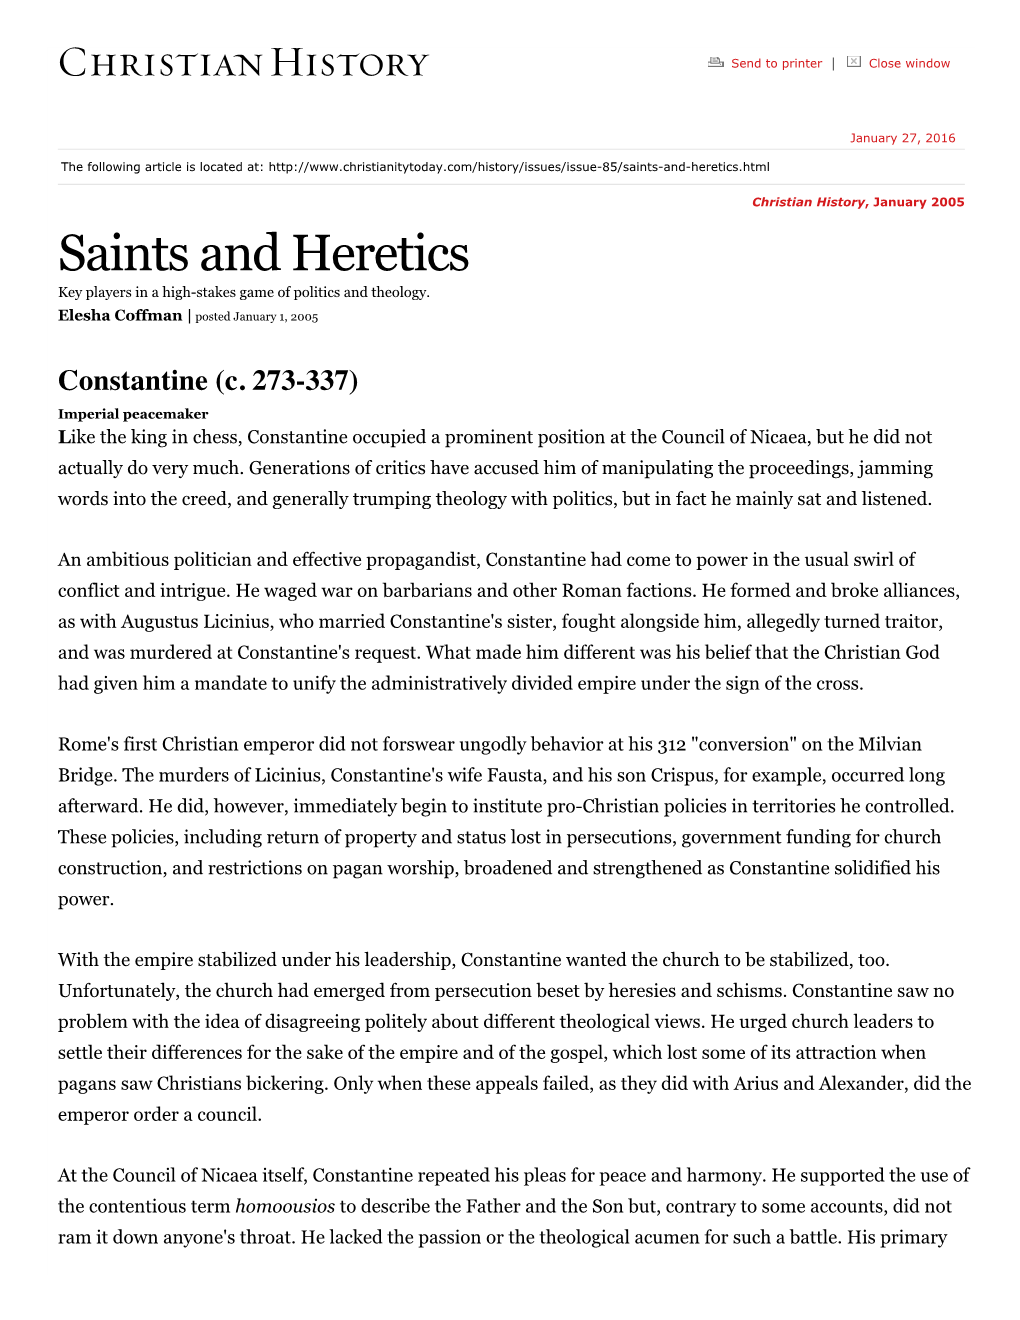 Saints and Heretics | Christian History